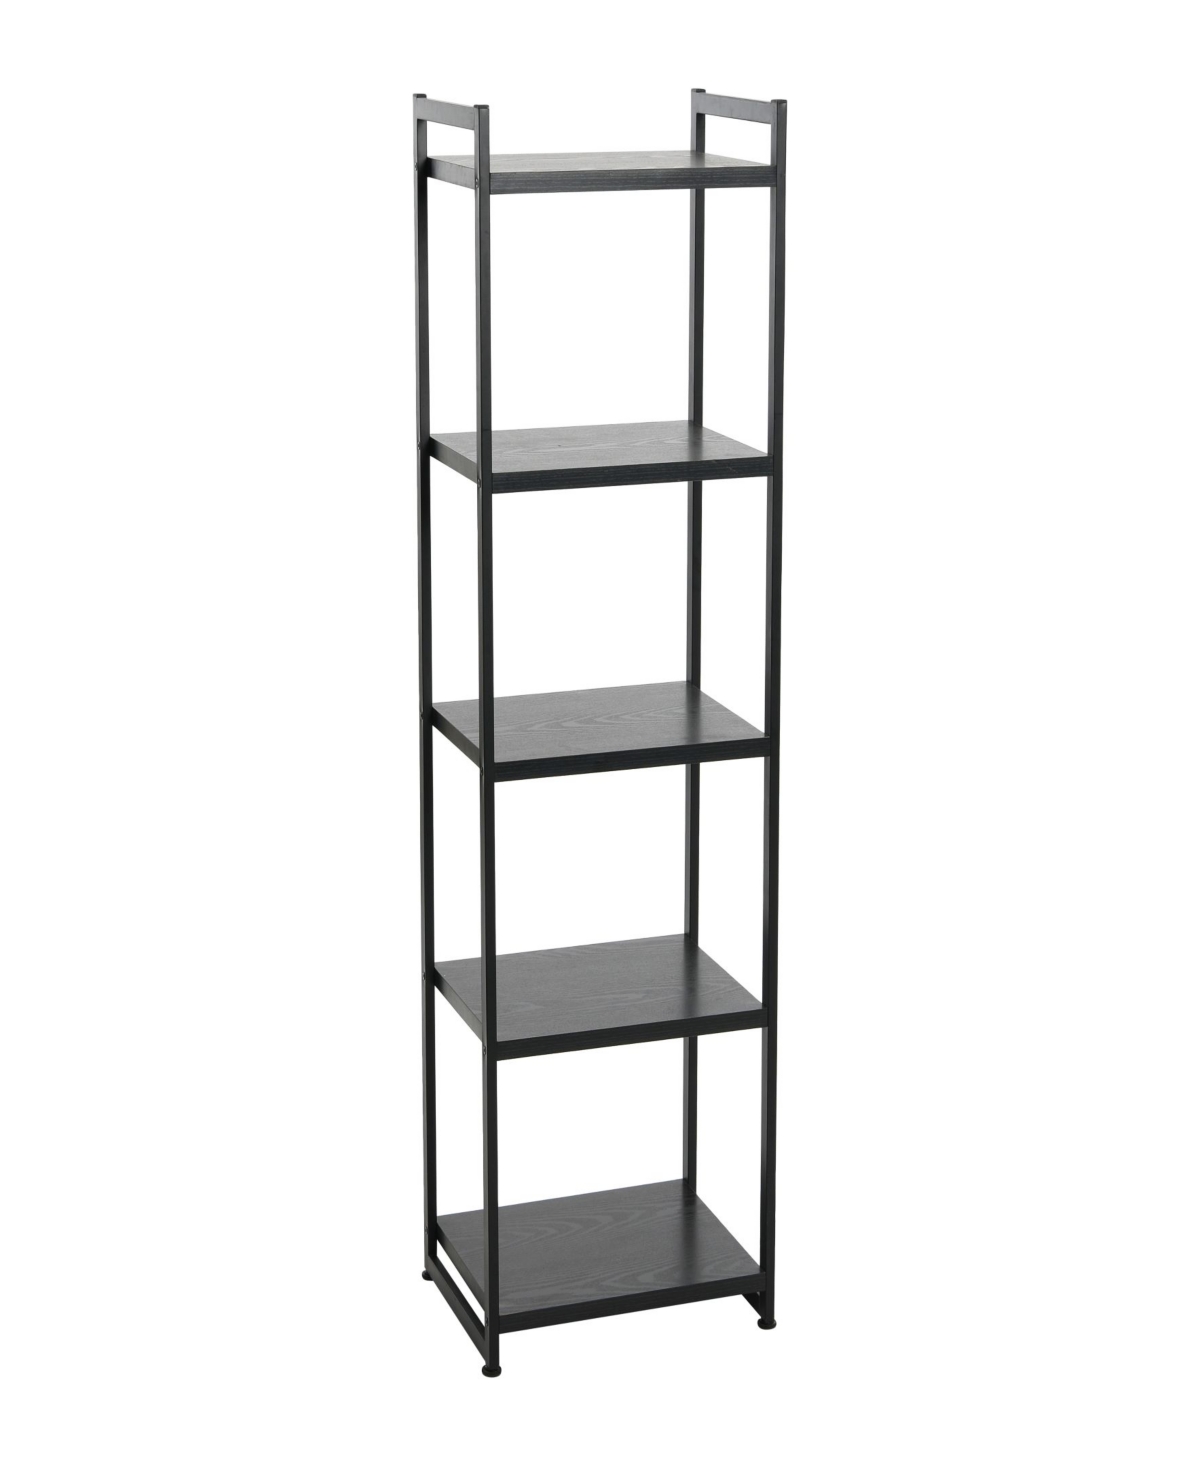 Household Essentials Tower Bookshelf, Tall And Narrow Bookshelf With 5 Shelves In Black